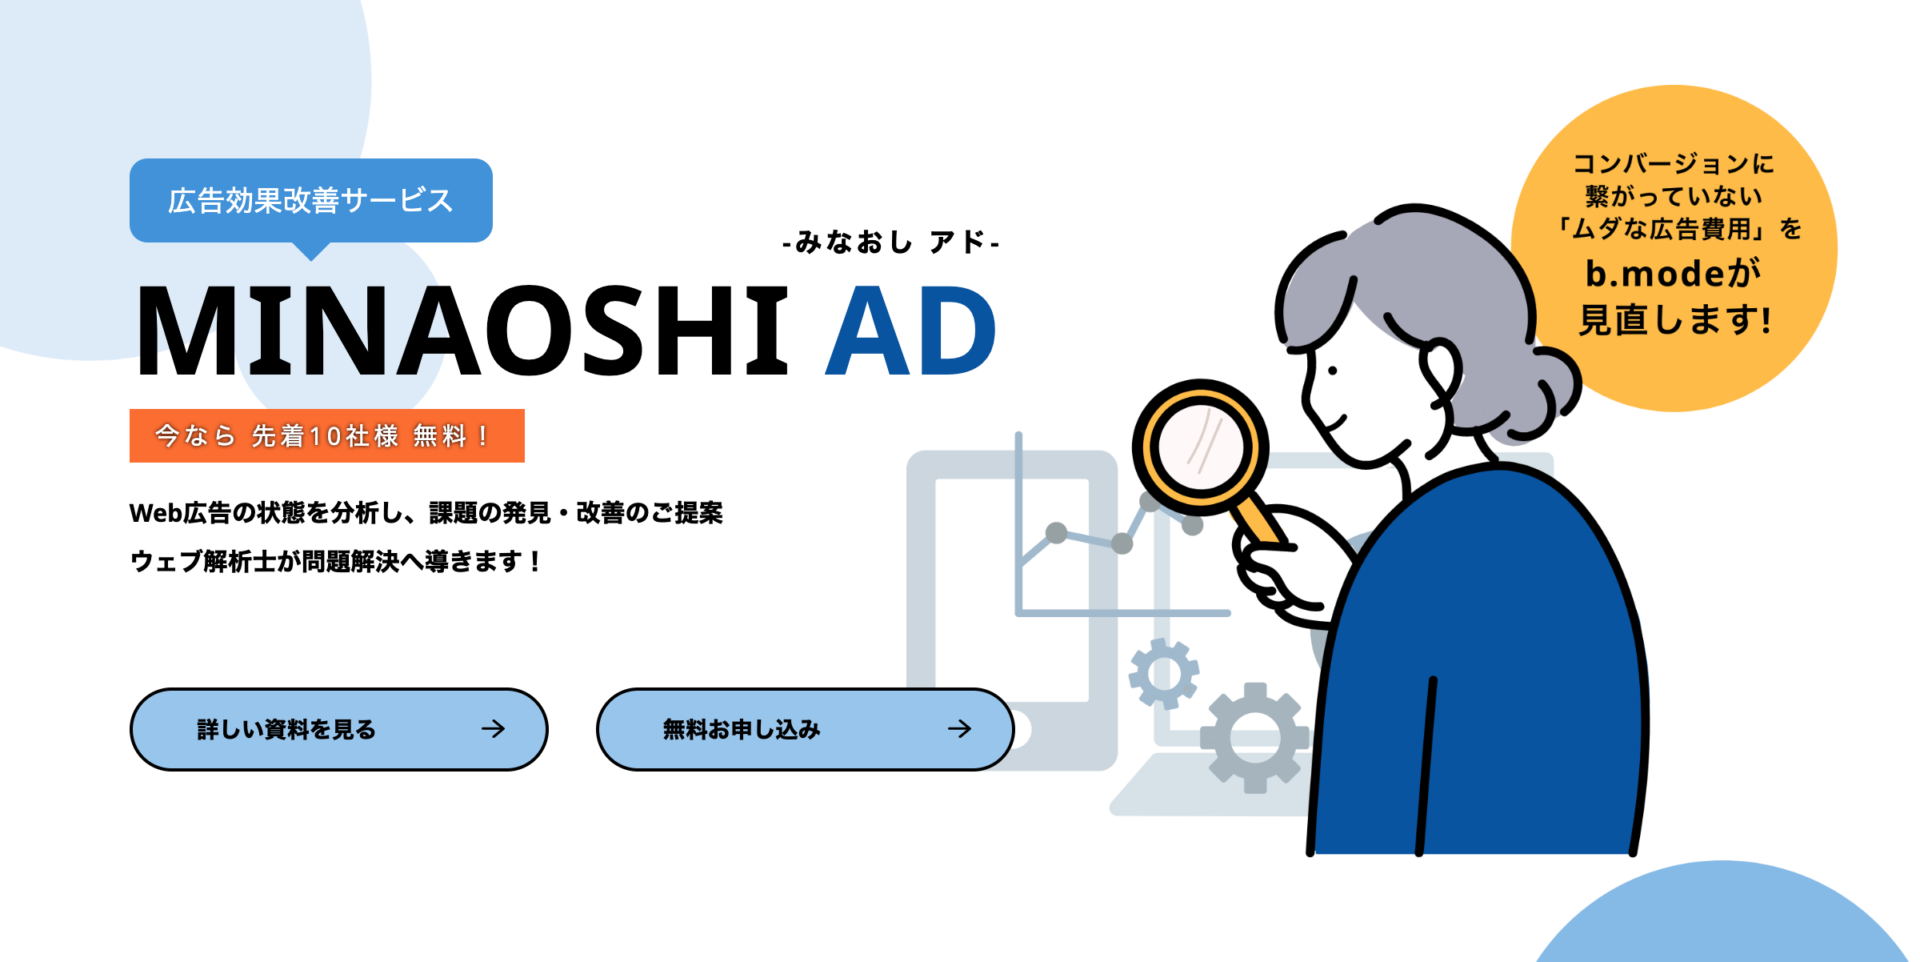 MINAOSHI AD